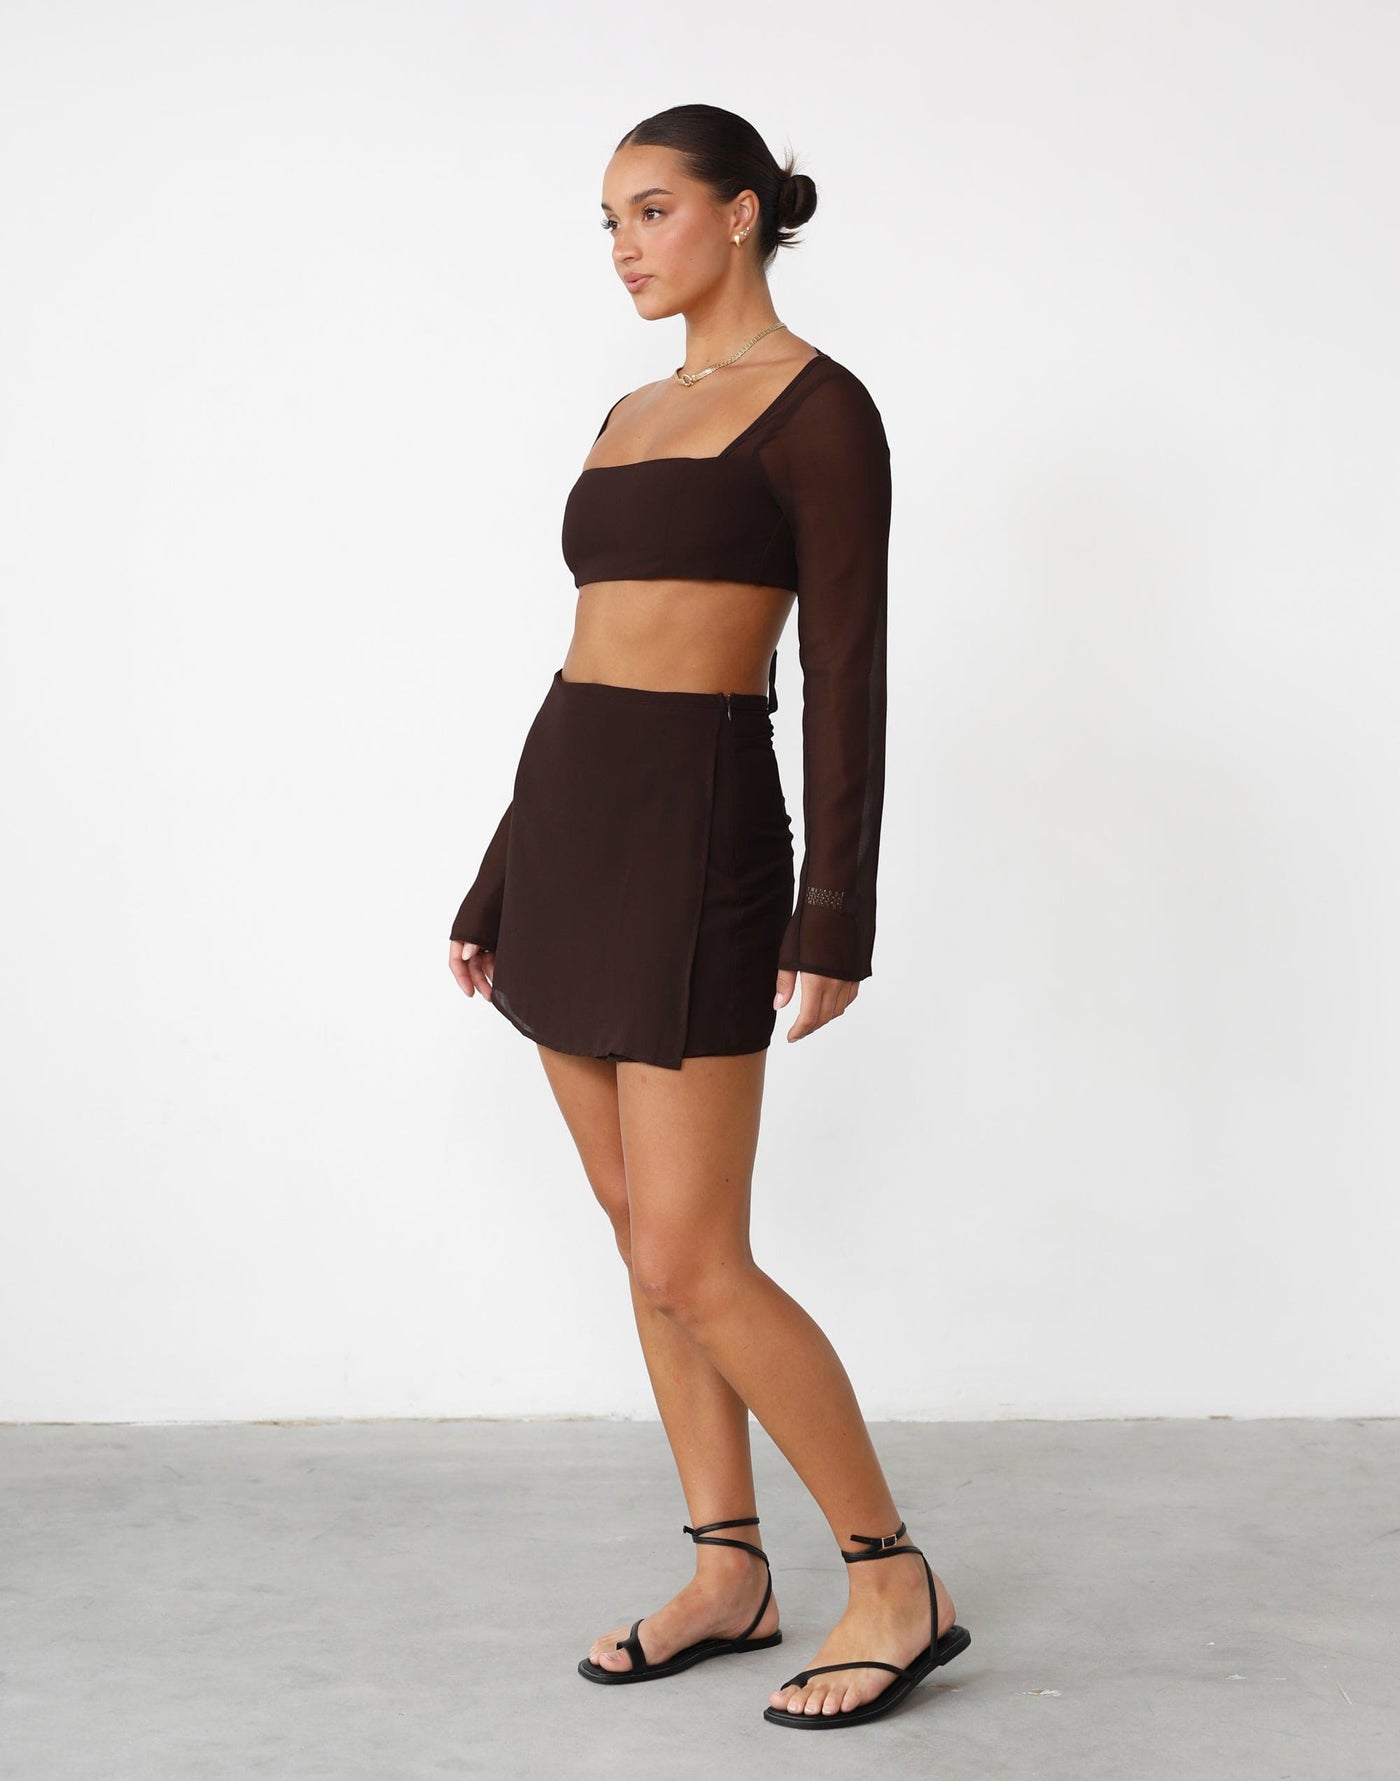 Abby Mini Skirt (Cocoa) - High Waisted Flare Mini Skirt - Women's Skirt - Charcoal Clothing